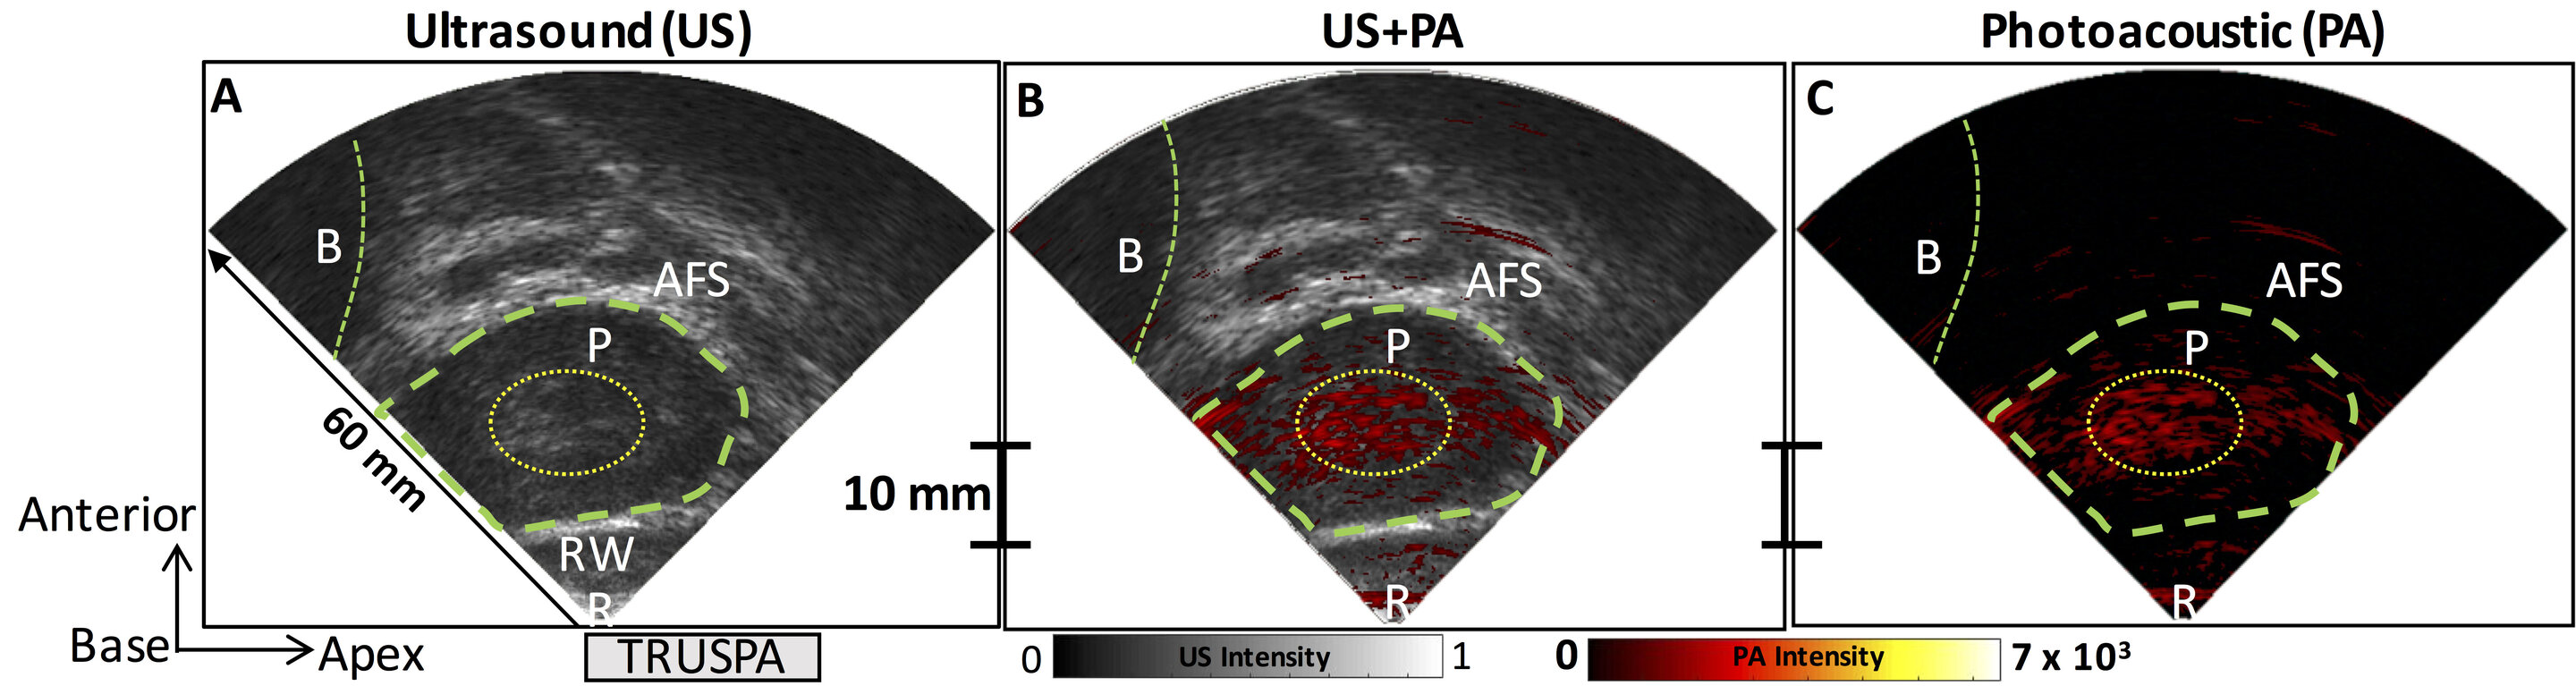 Prostate-imaging camera captures molecular detail to detect cancer - Medical Xpress thumbnail